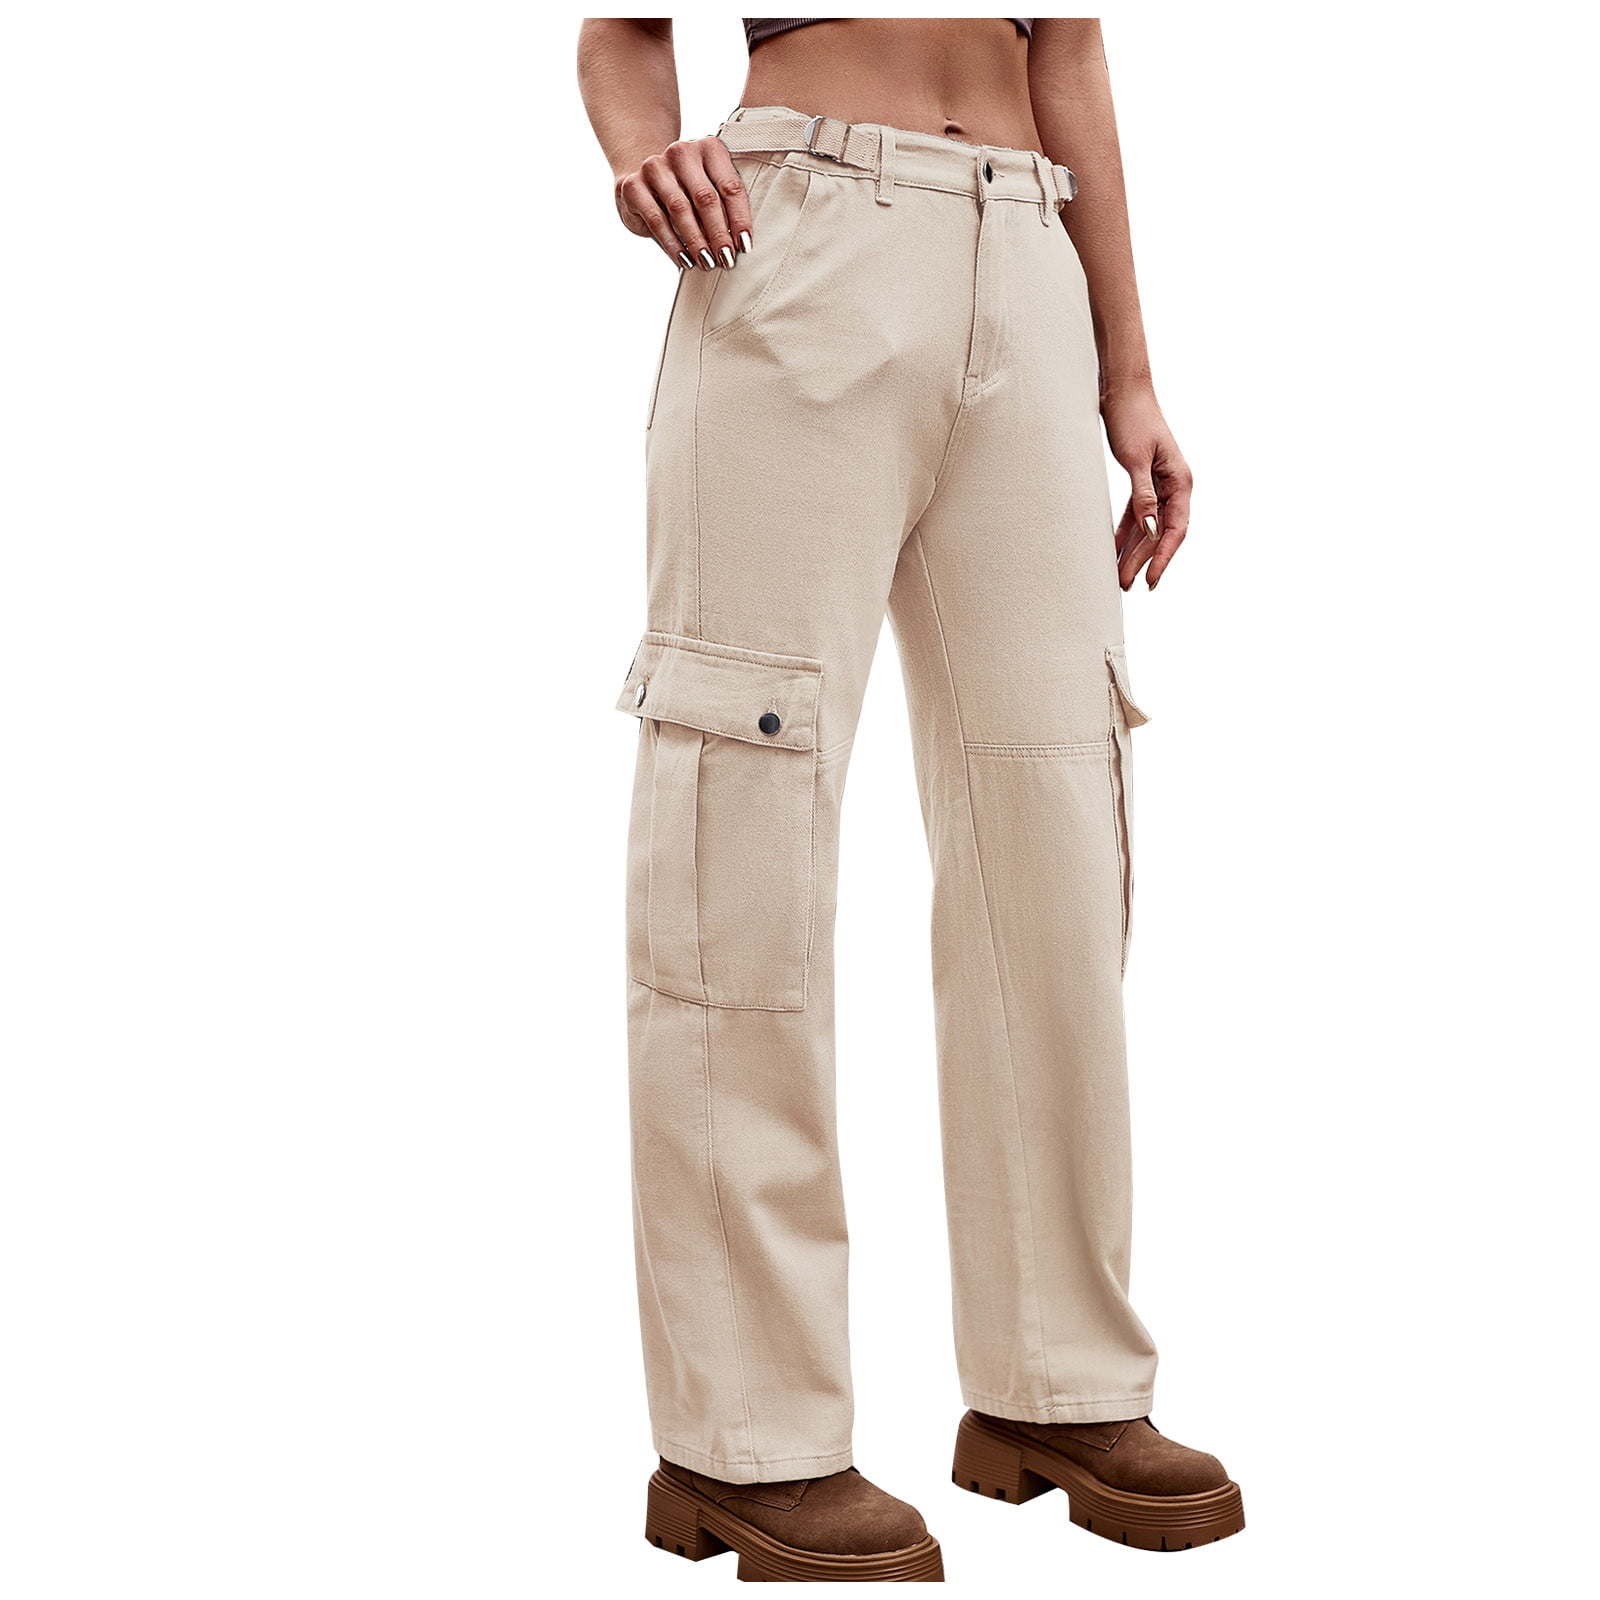 Elastic Pants Waist Extenders (6 Pack), Adjustable Waistband Expanders for  Men and Women, Jeans Pants Button Extender Set 